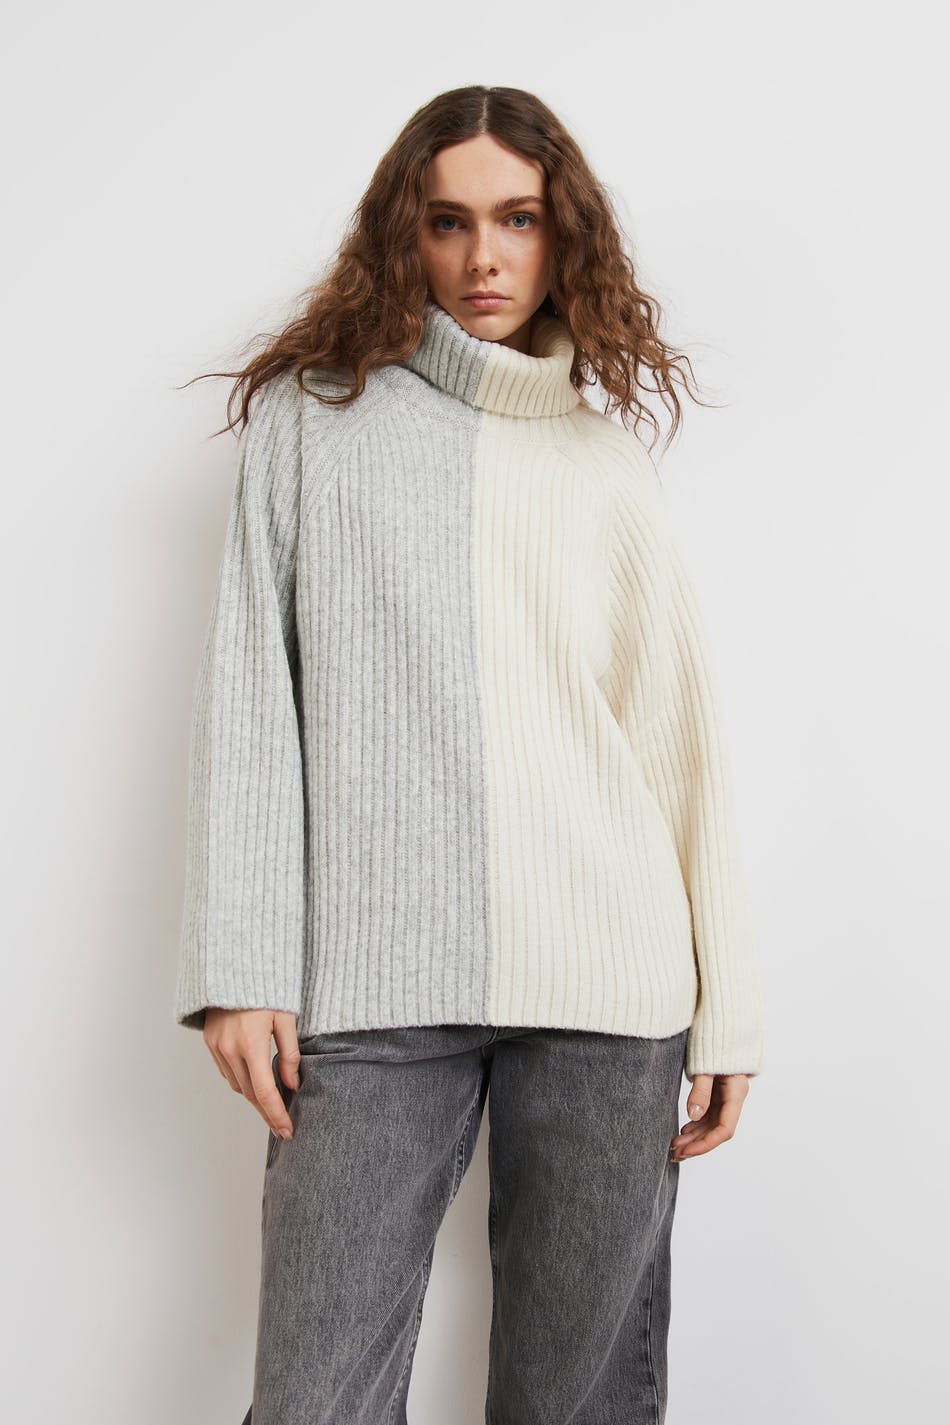 sadel kontrast at straffe Fia knitted sweater - Gina Tricot